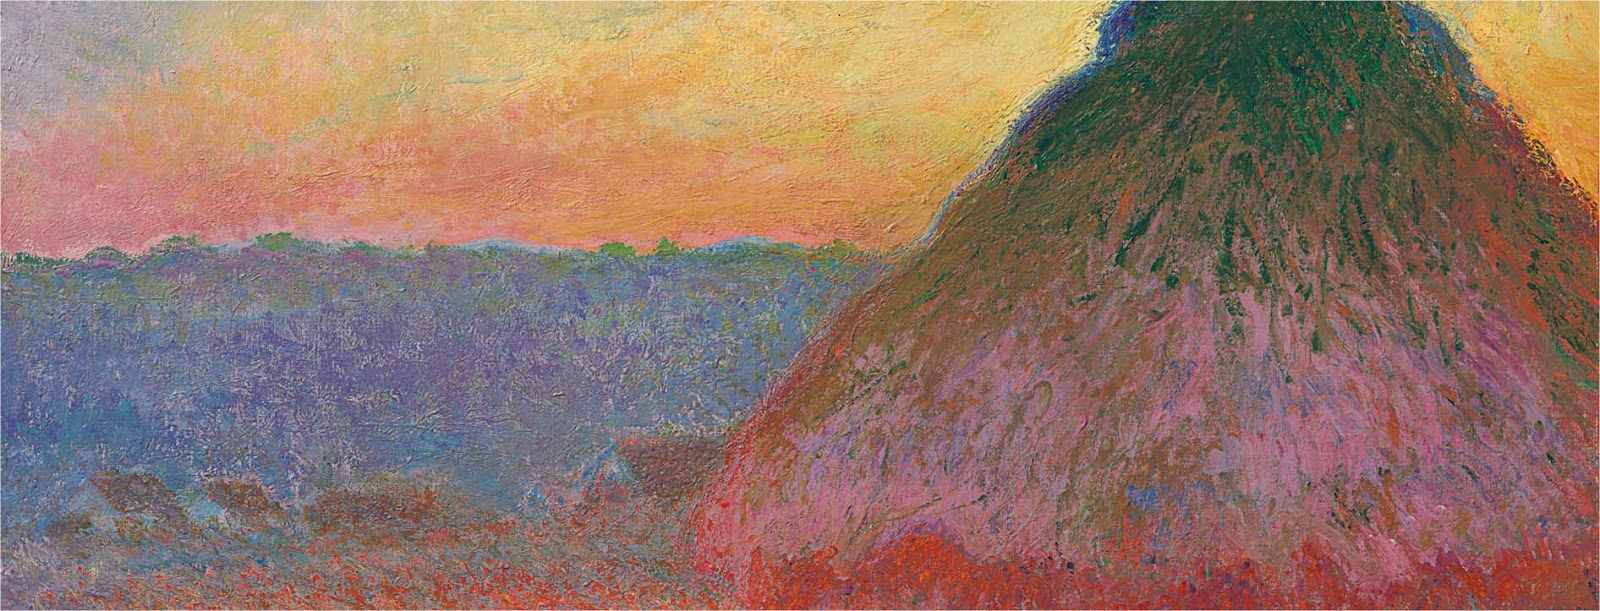 Claude+Monet-1840-1926 (248).jpg